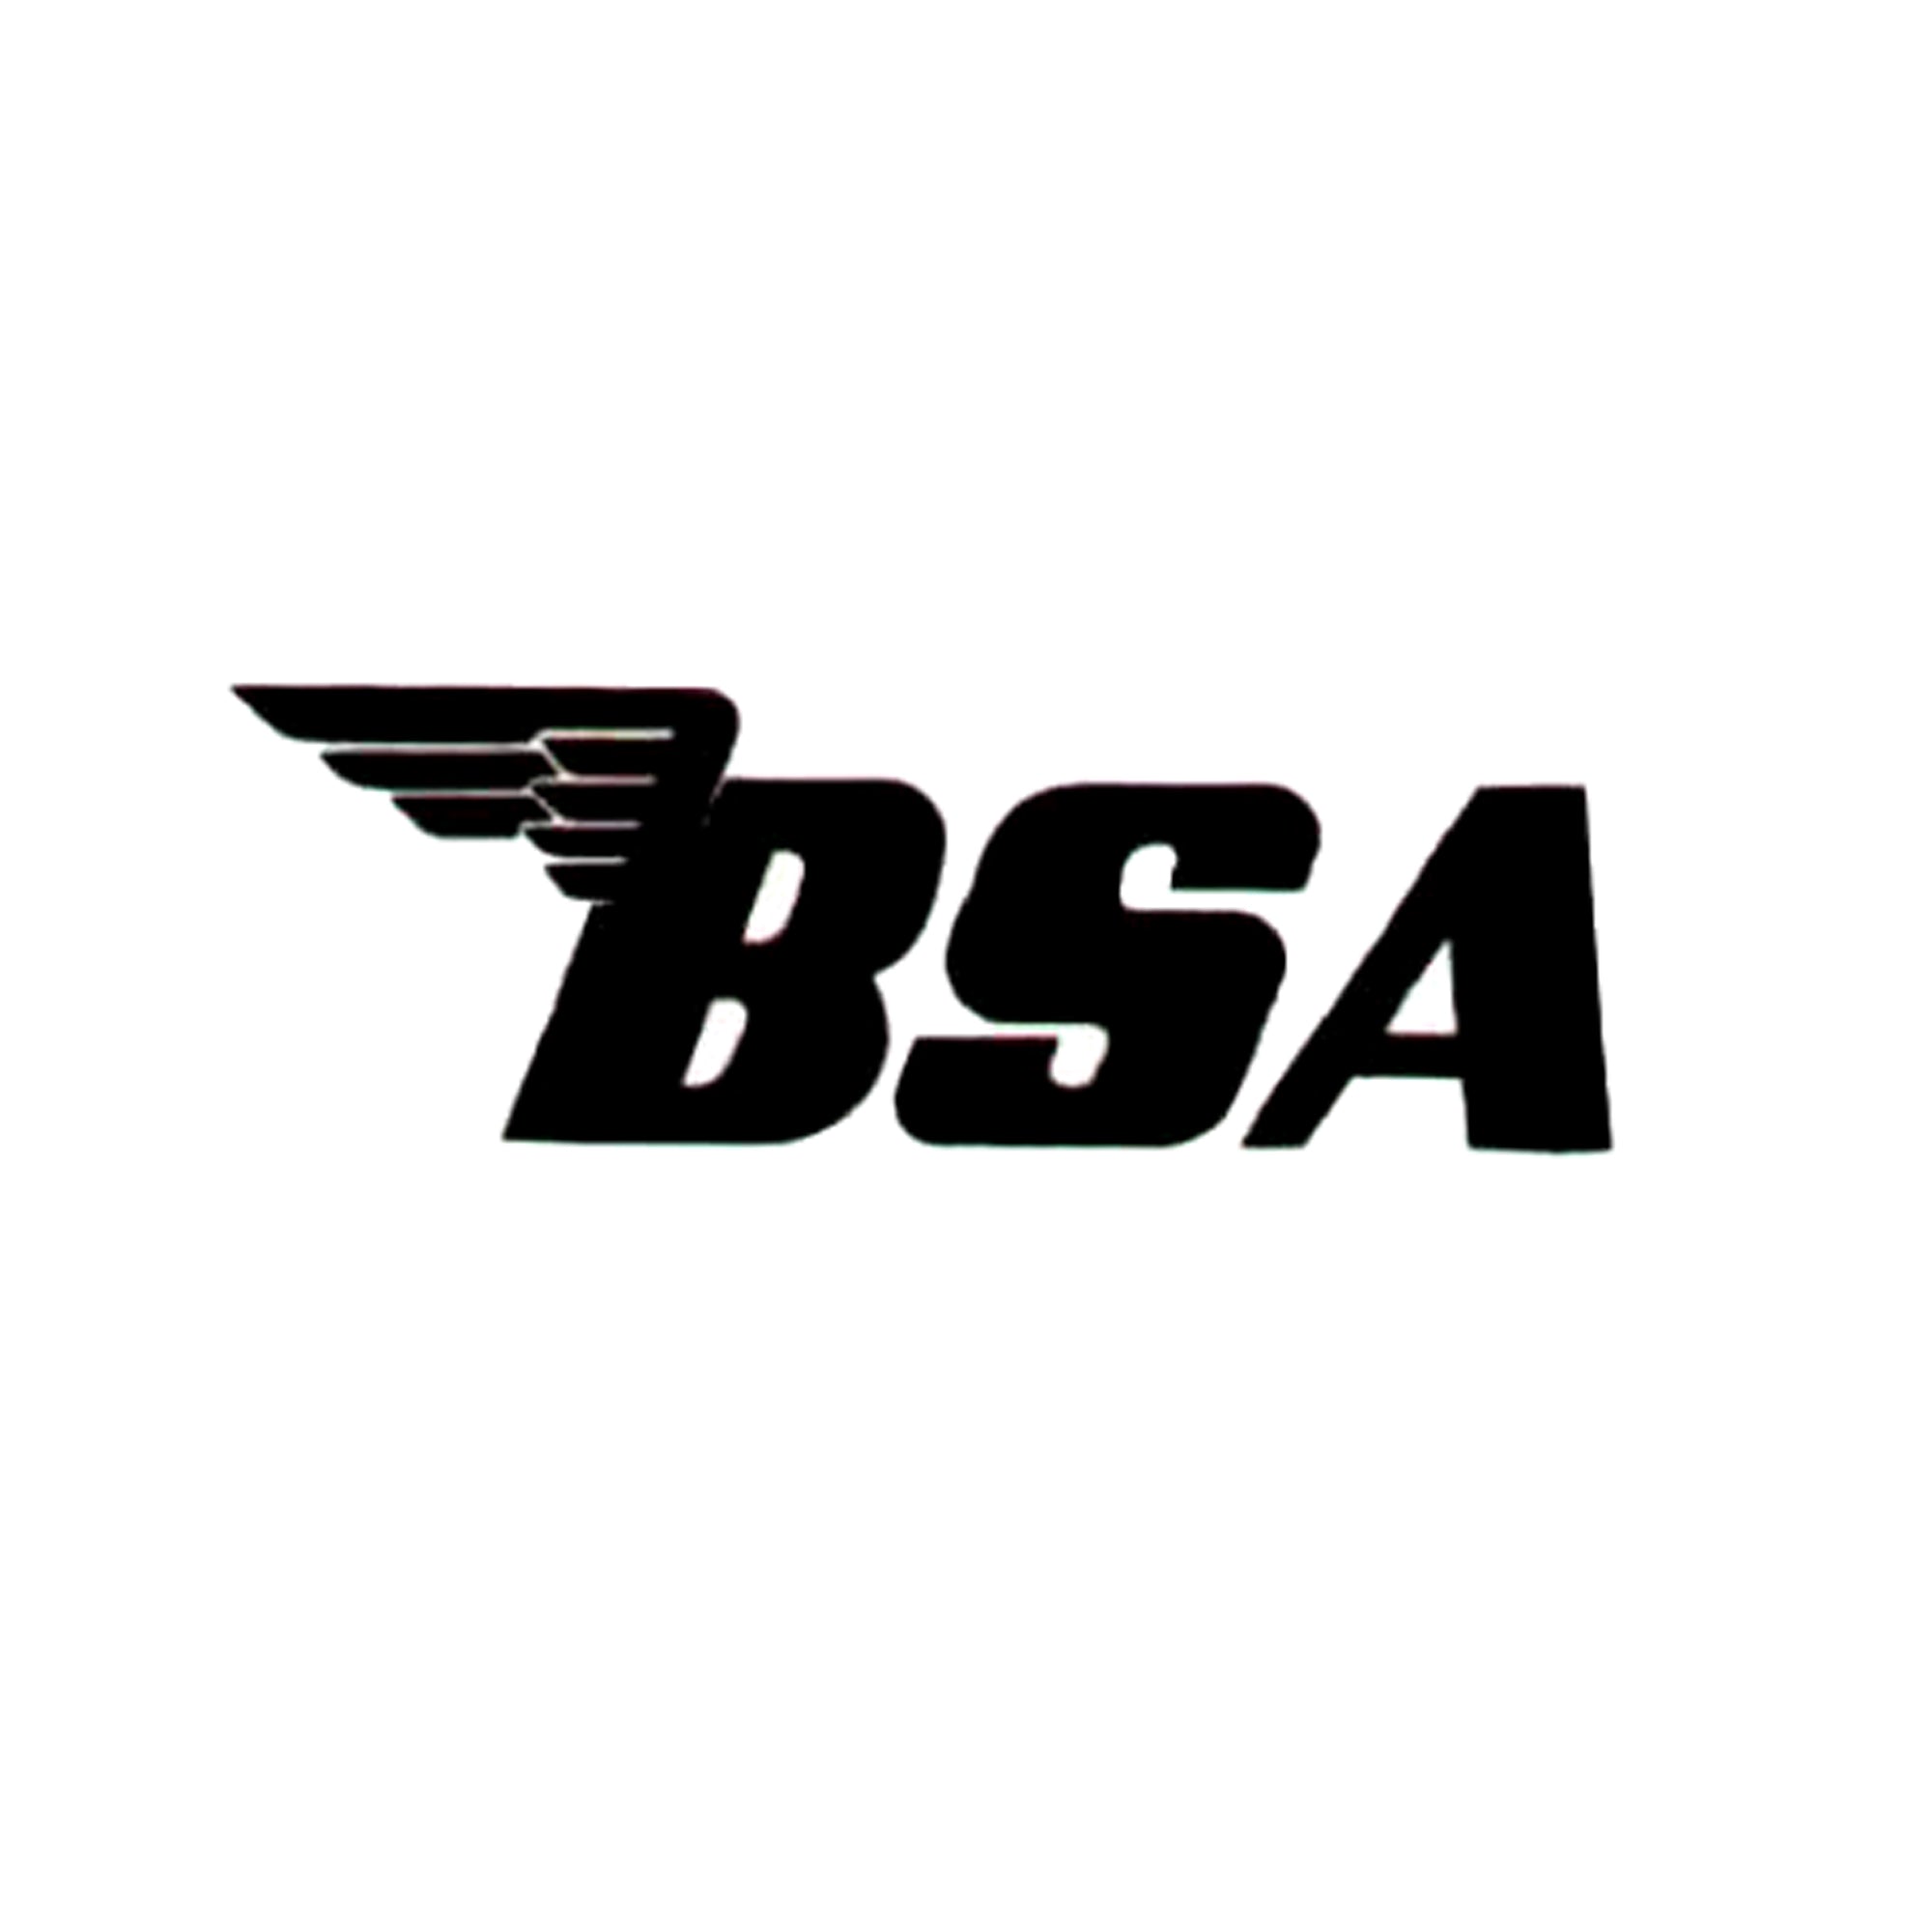 BSA Wings Logo Aufkleber